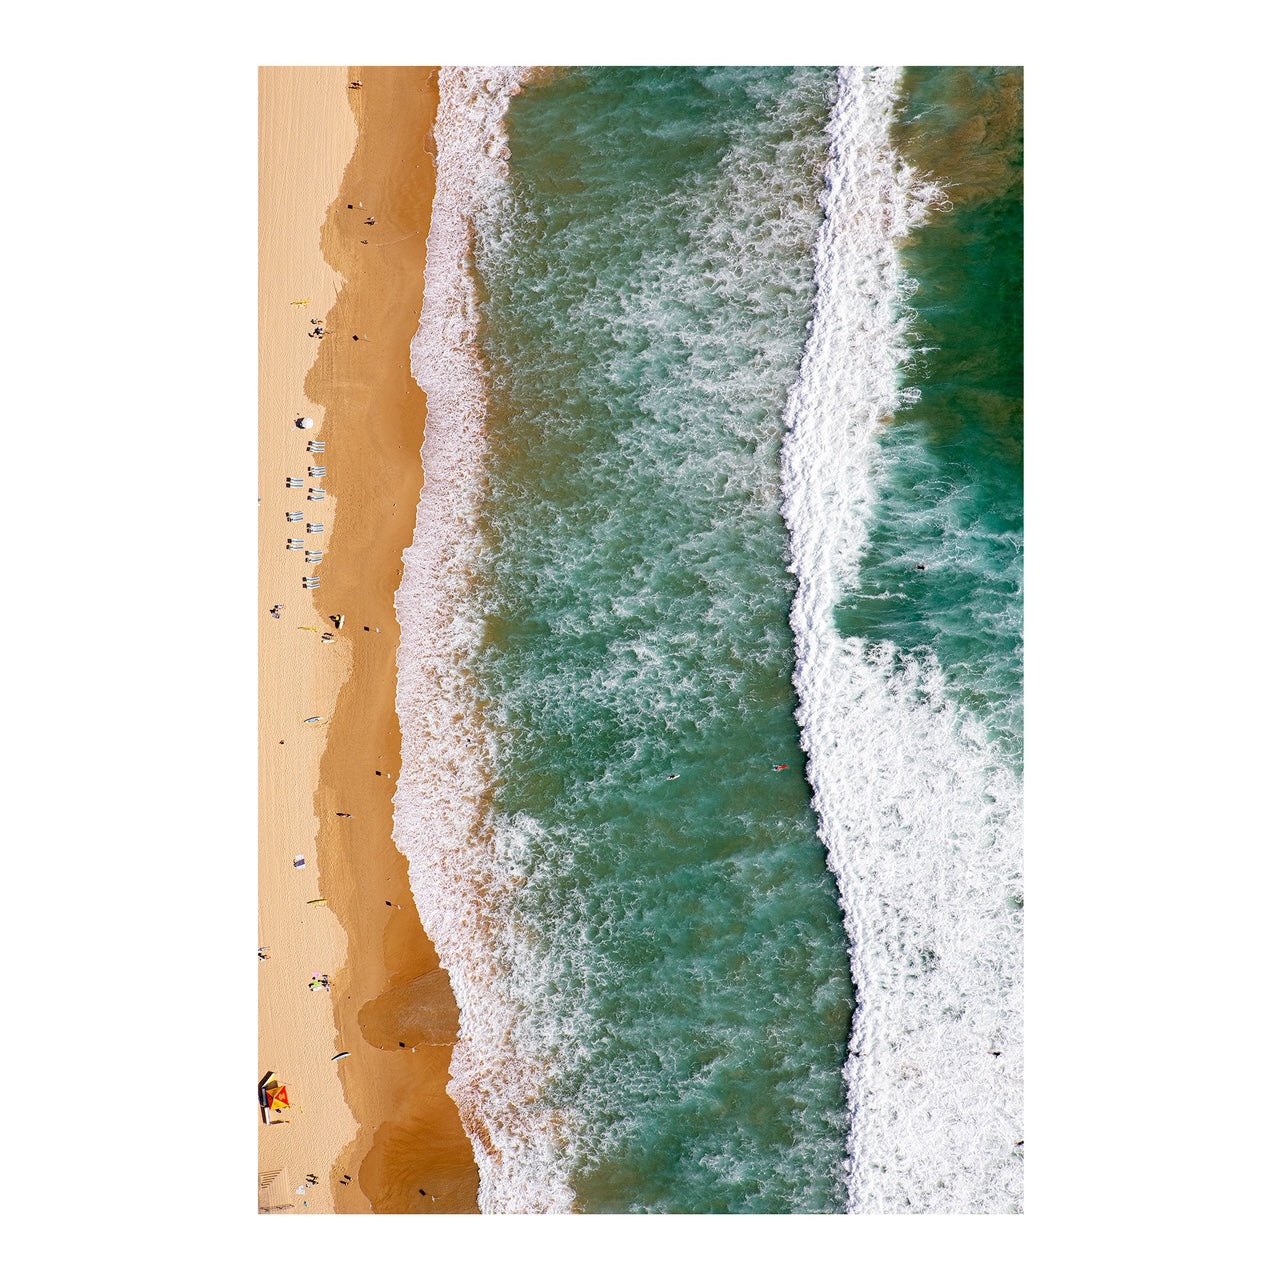 Wave Manly Beach Vertical, Australia